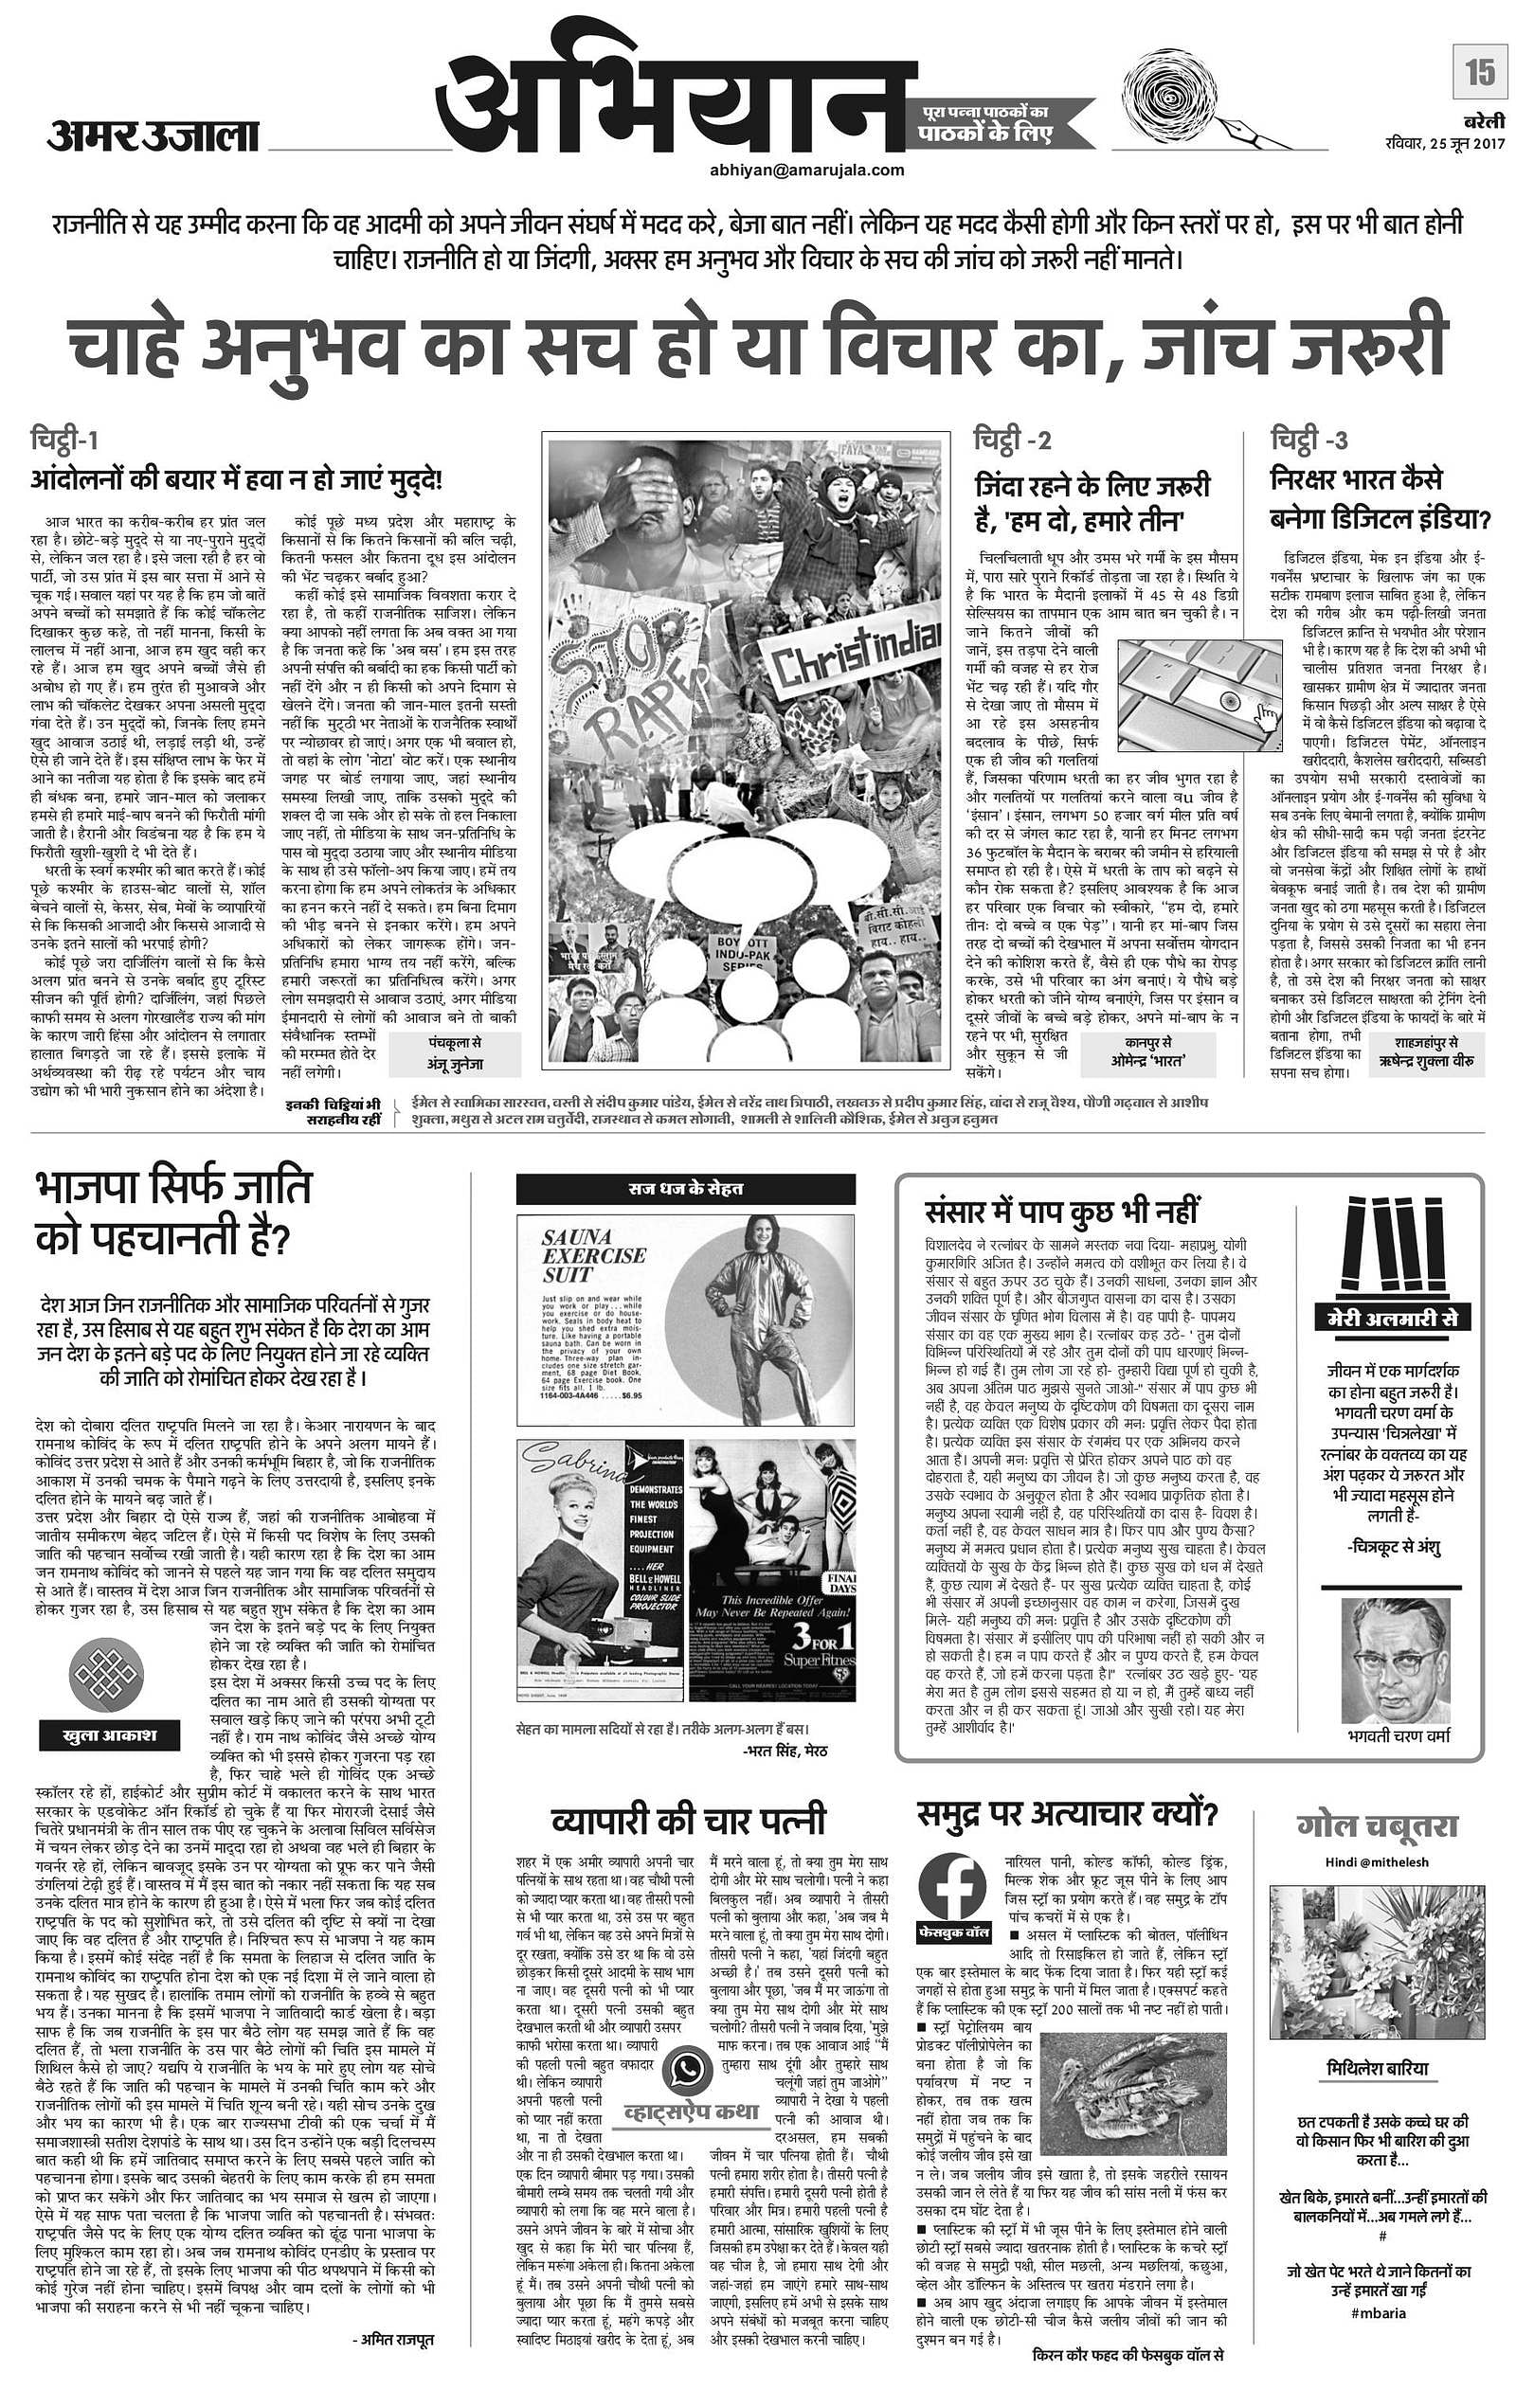 Amar Ujala Hindi News Paper Bareilly Edition Cnn